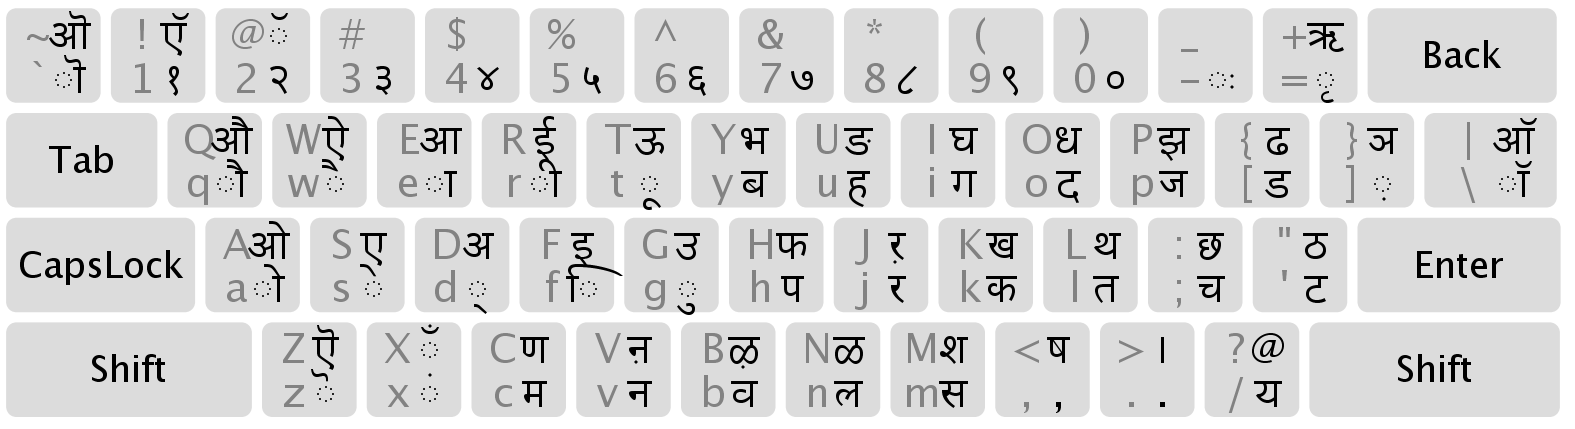 devnagri hindi font download for ms word 2007